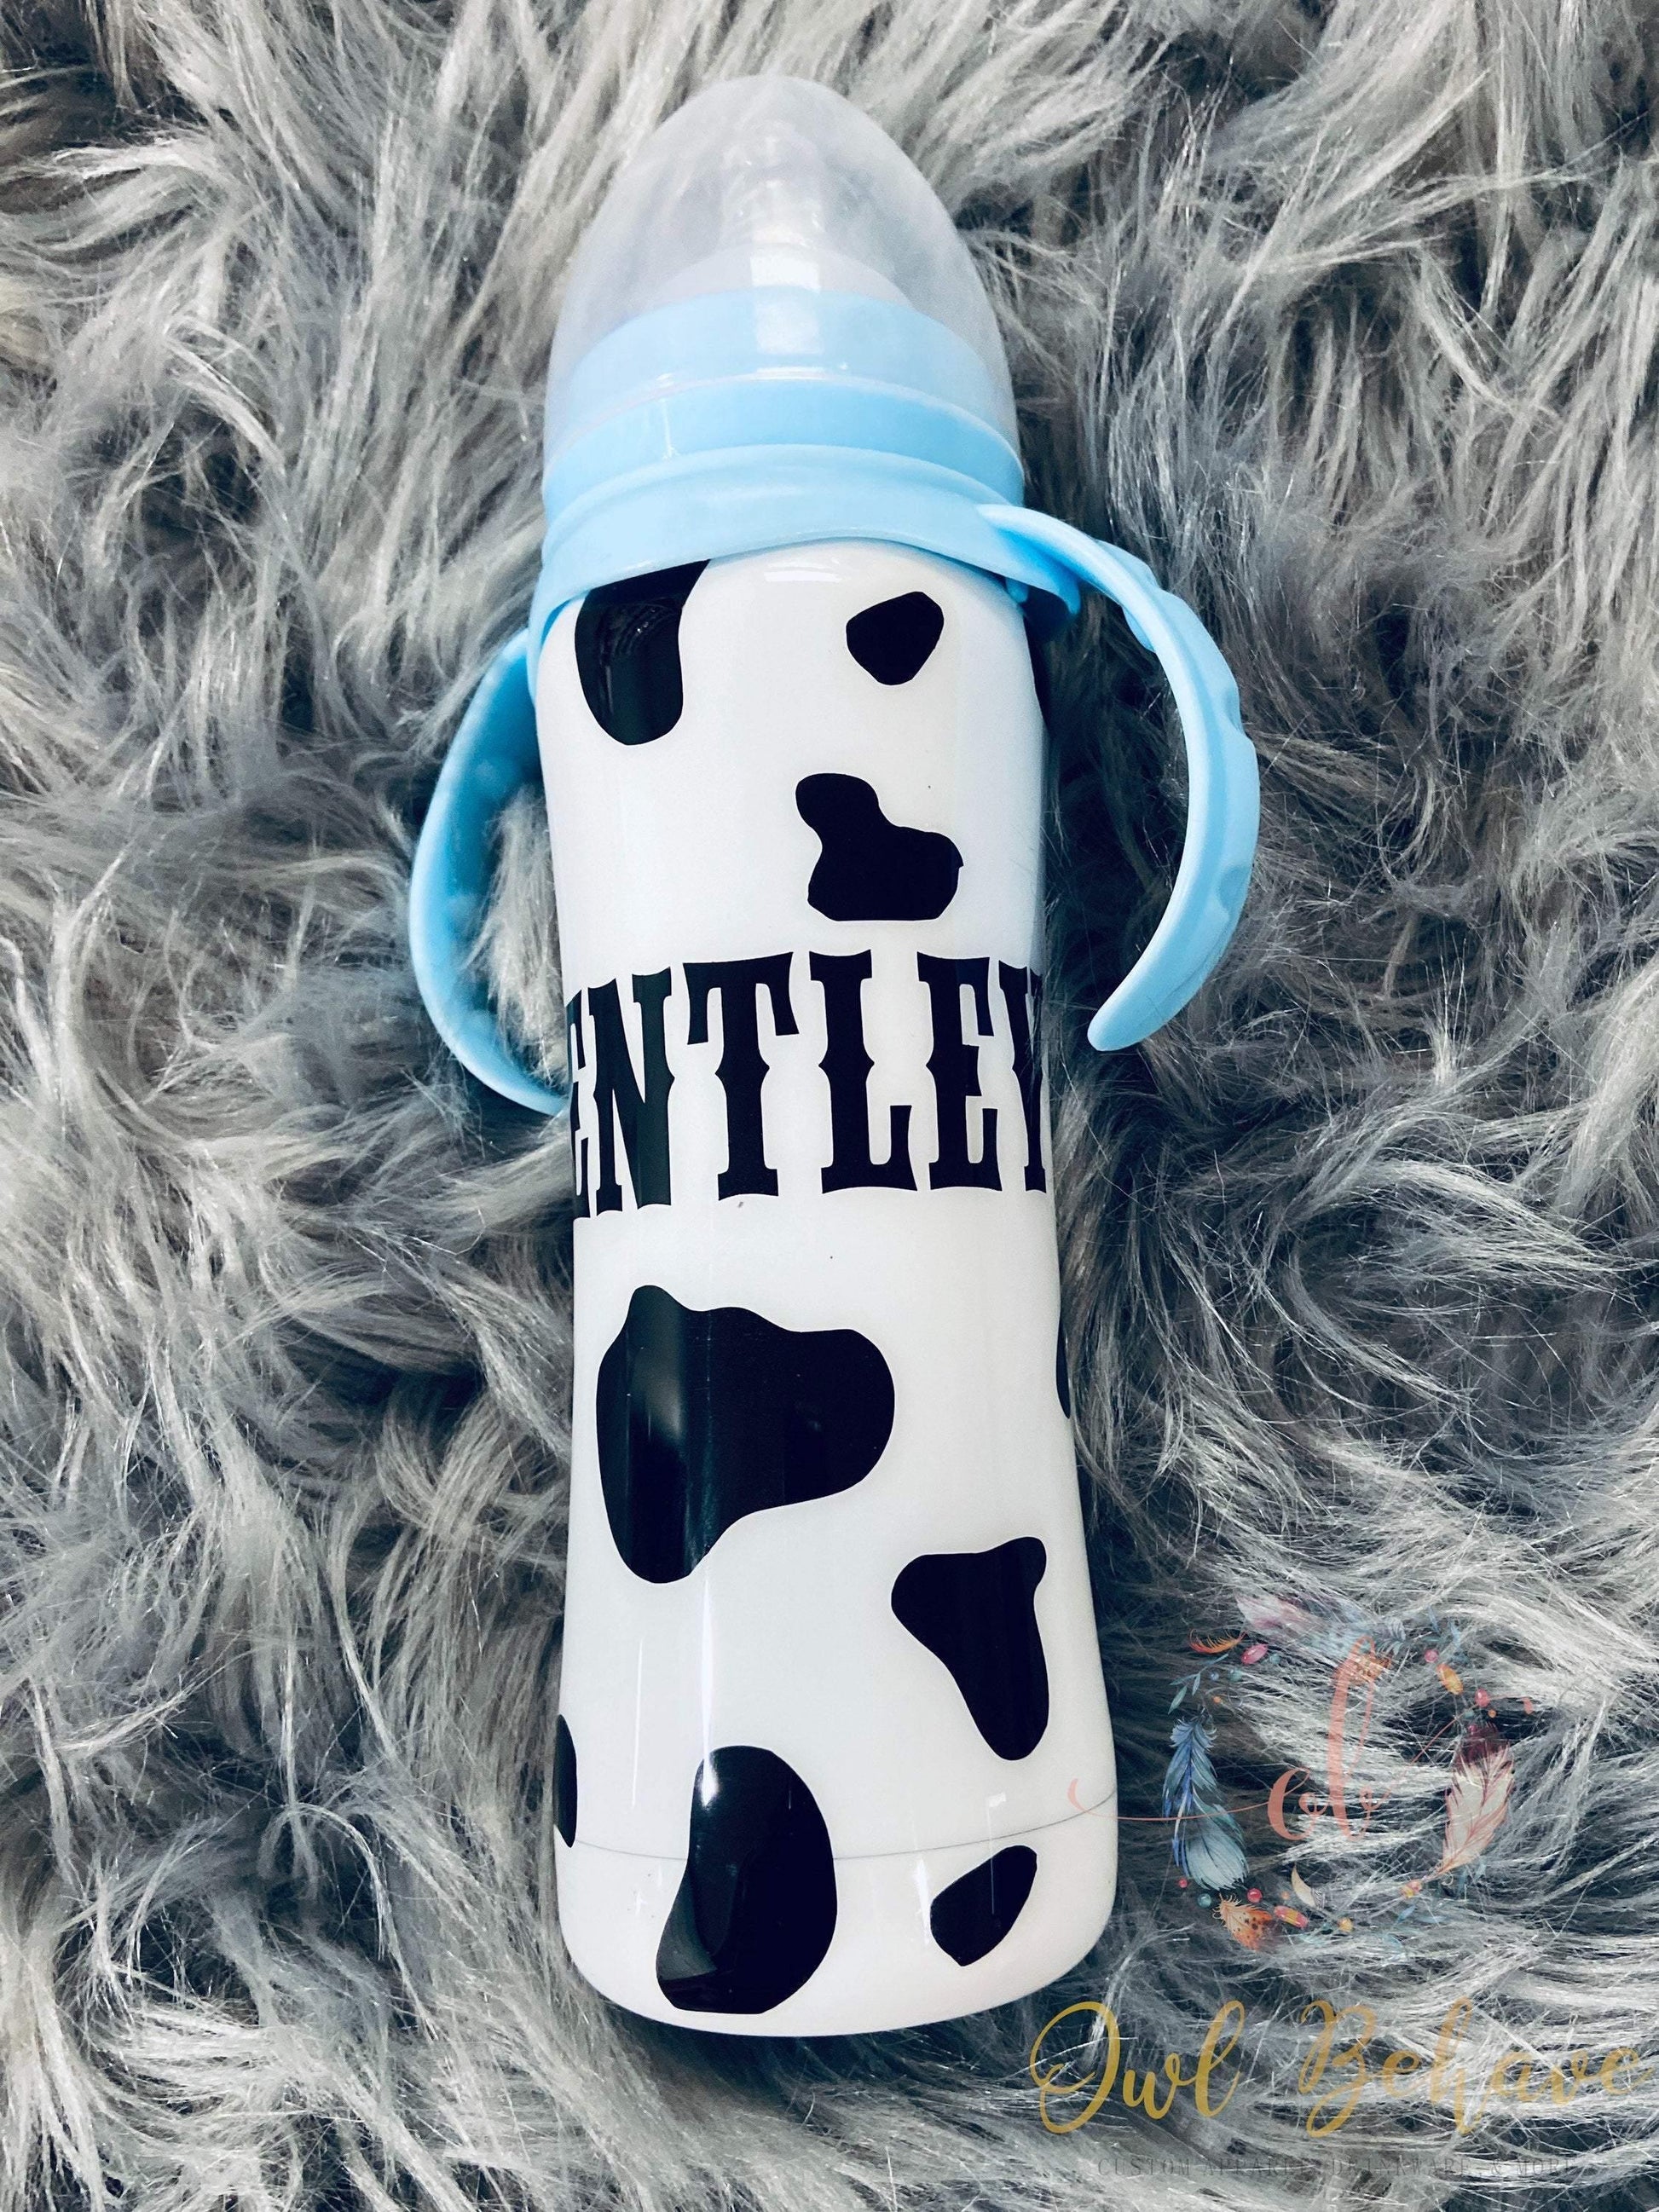 Cow Print Tumbler Water Bottle Zipper Pouch